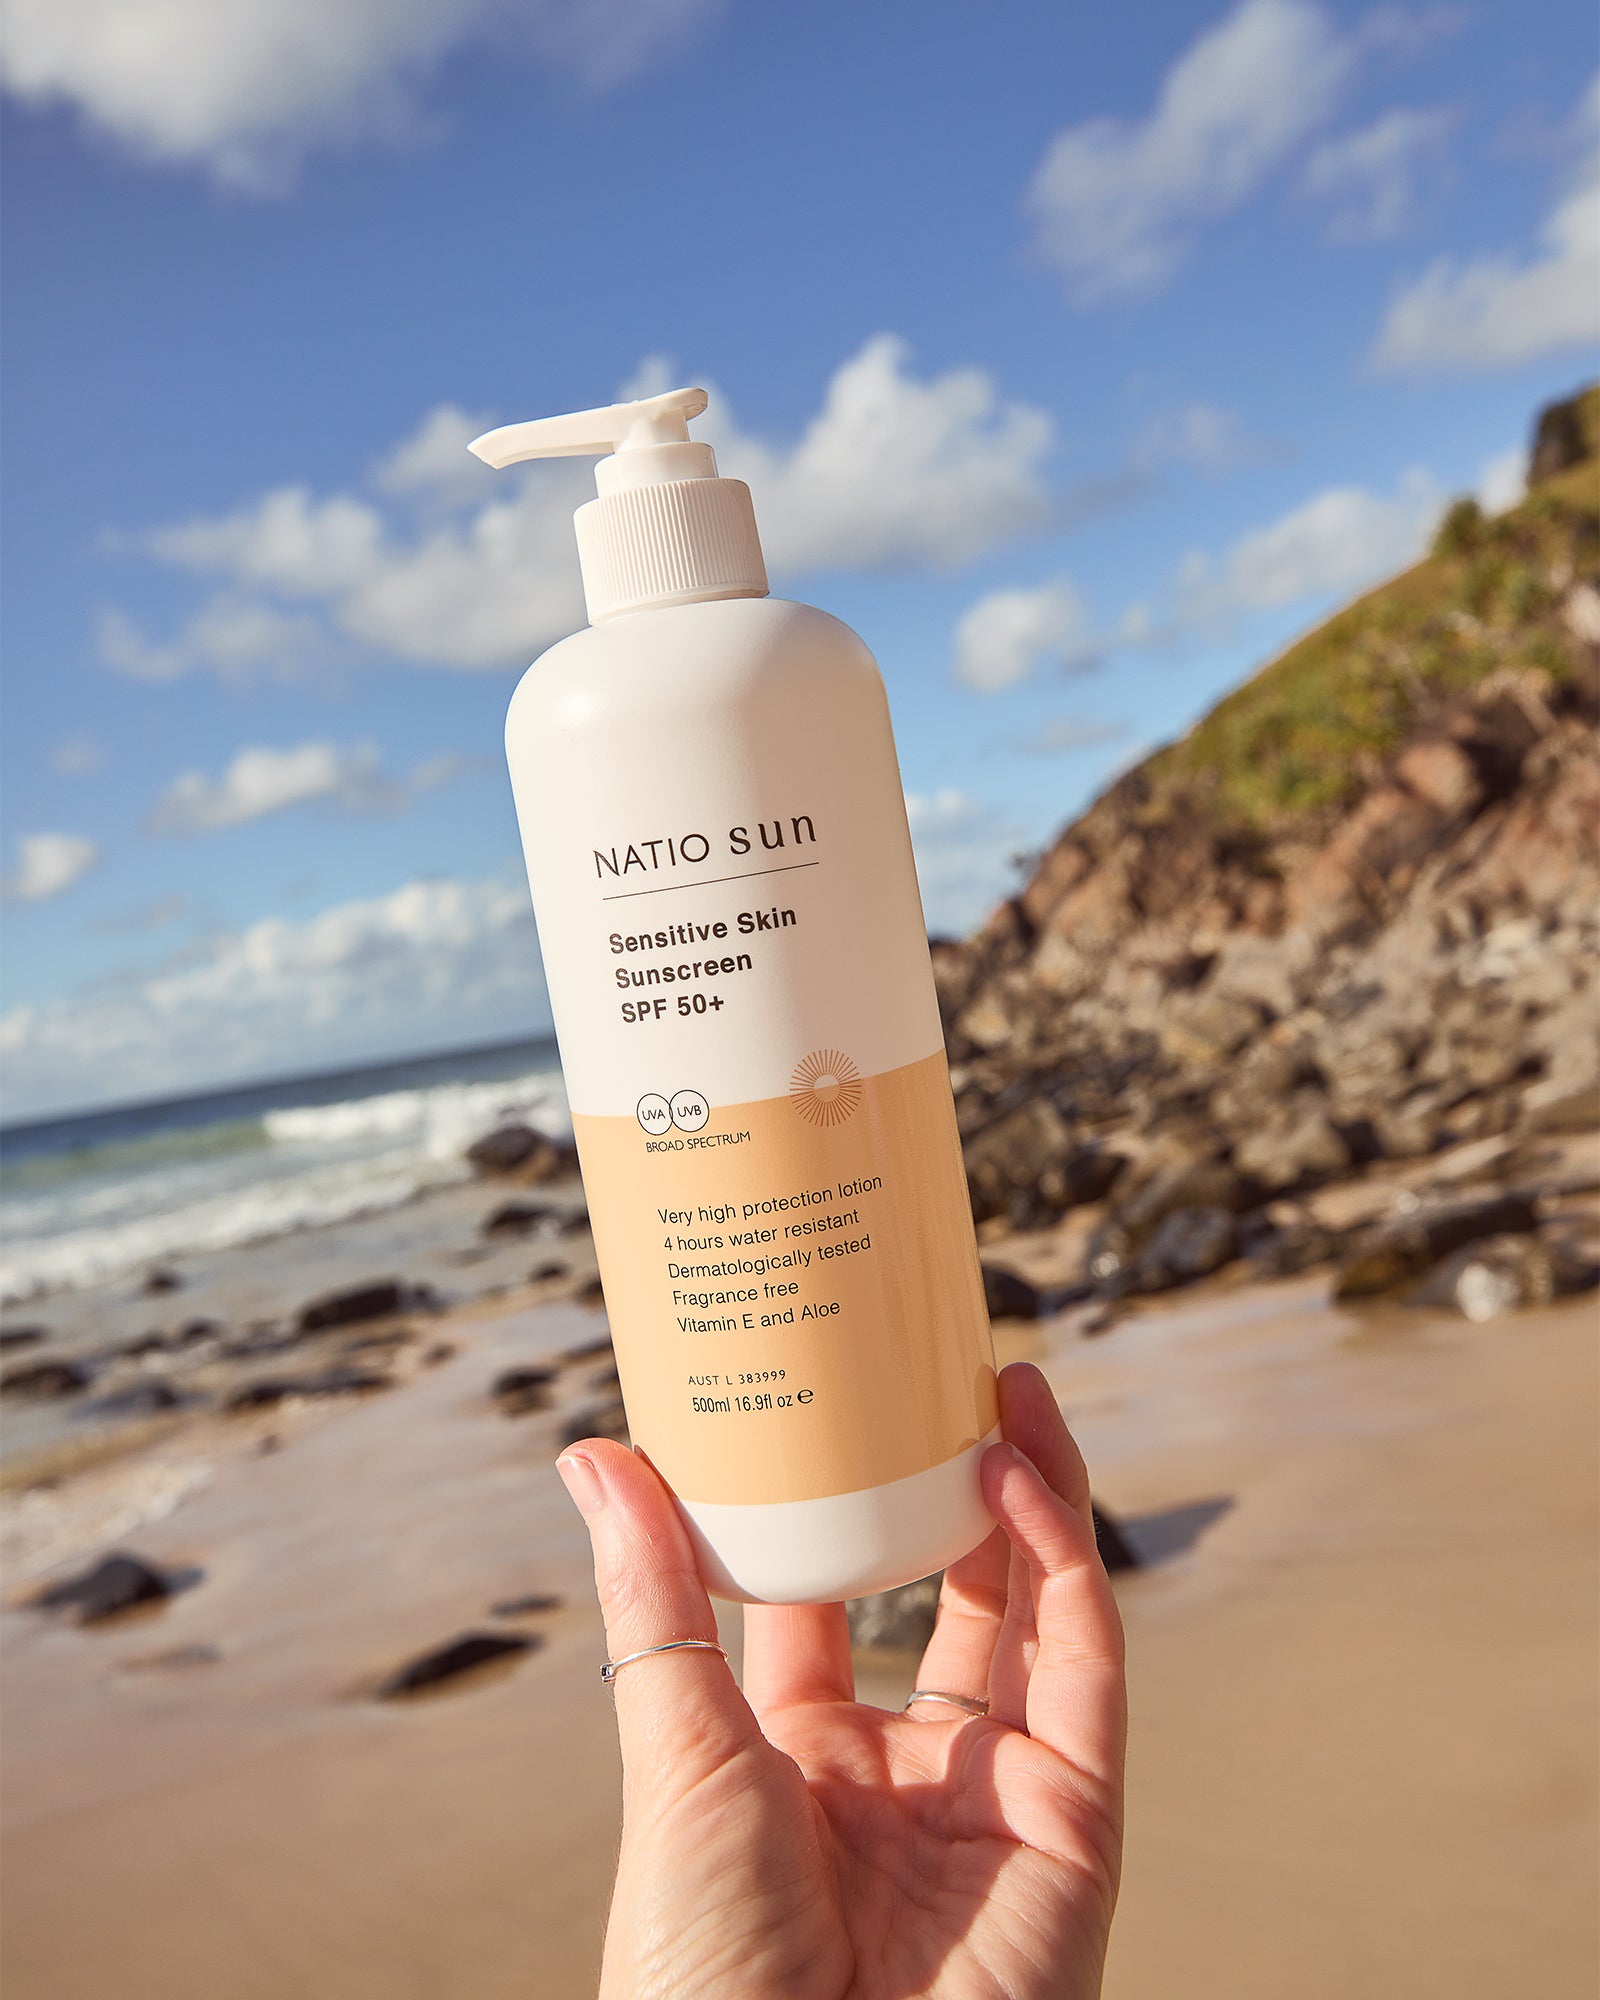 Sun Creme Sensitive Protect SPF 50+, sunscreen for sensitive, dry skin